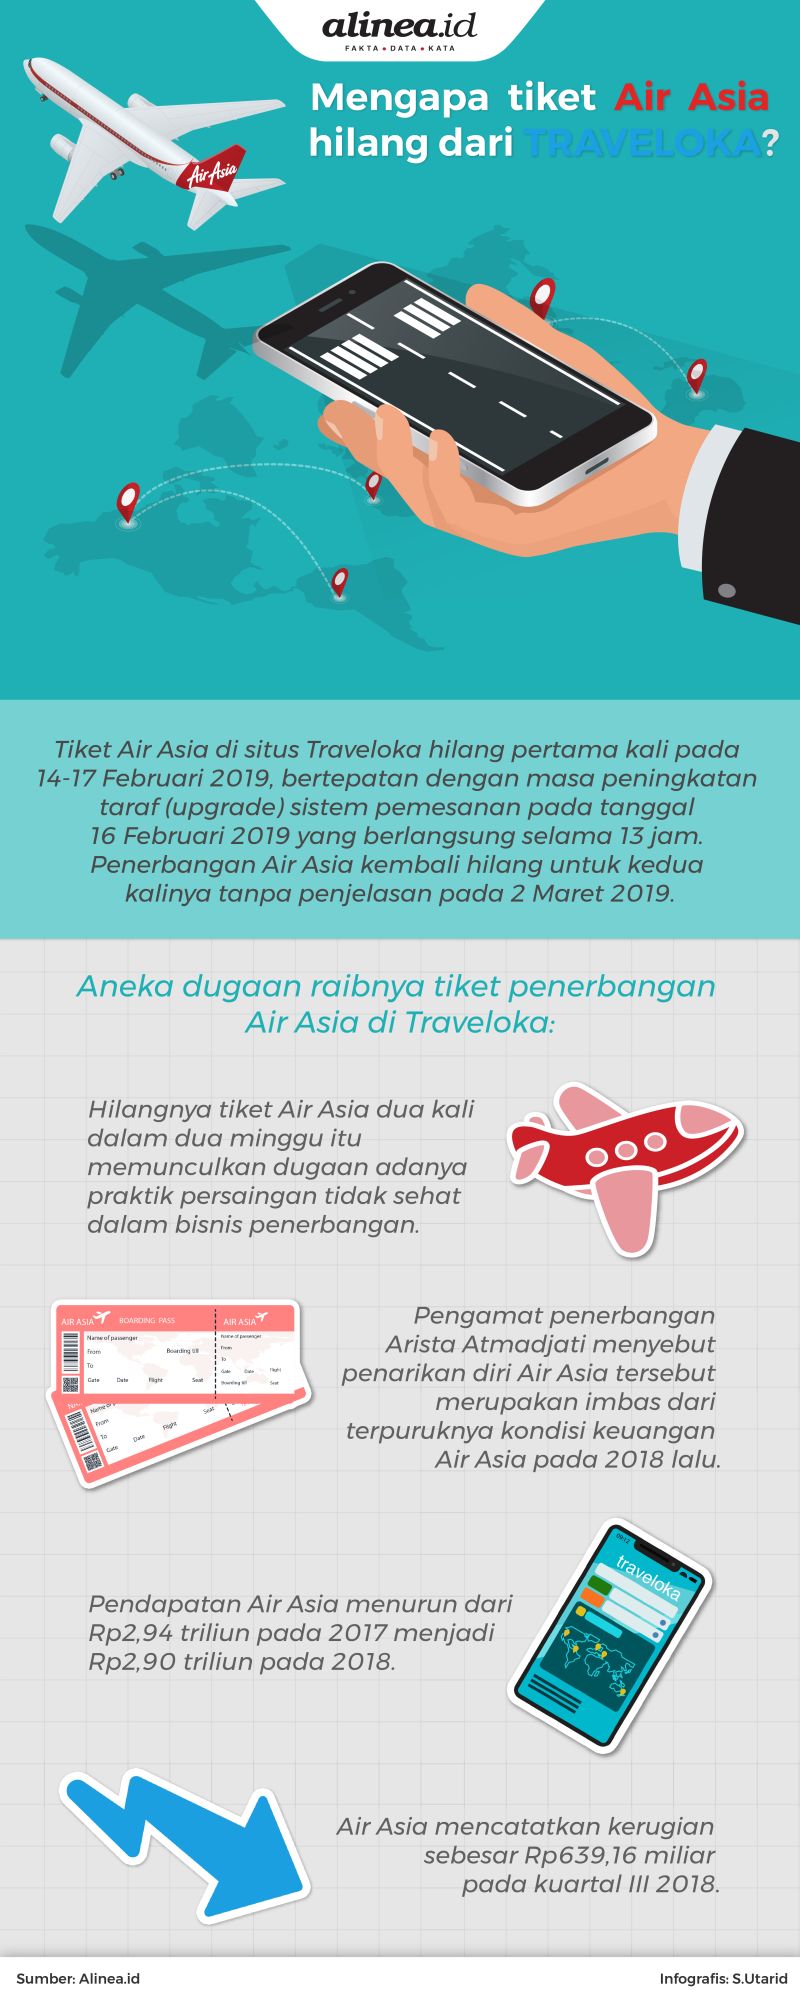 Penarikan tiket penerbangan Air Asia dari Traveloka mengundang sejumlah spekulasi.